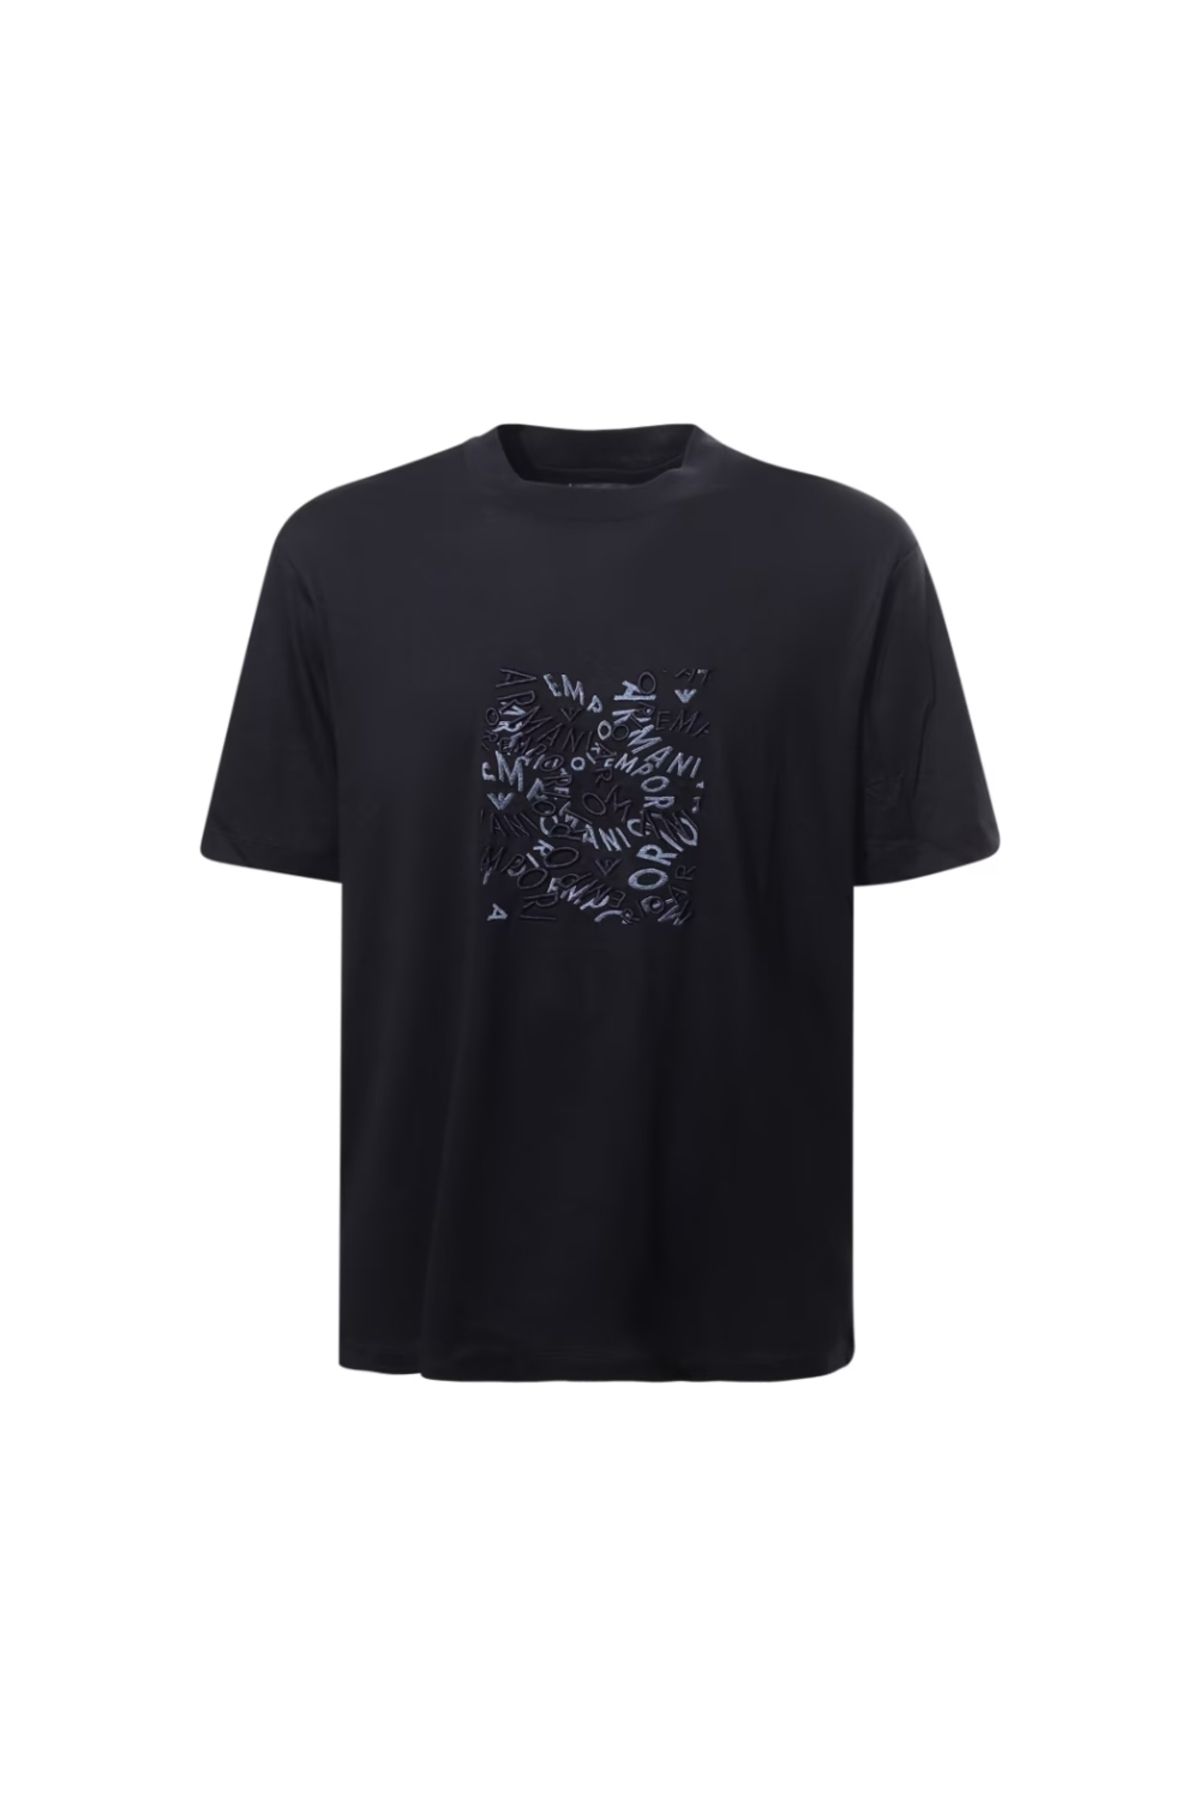 Emporio Armani Erkek Pamuklu Kısa Boy Rahat Kesim Günlük Lacivert T-Shirt 3D1TG3 1JPZZ-09R1